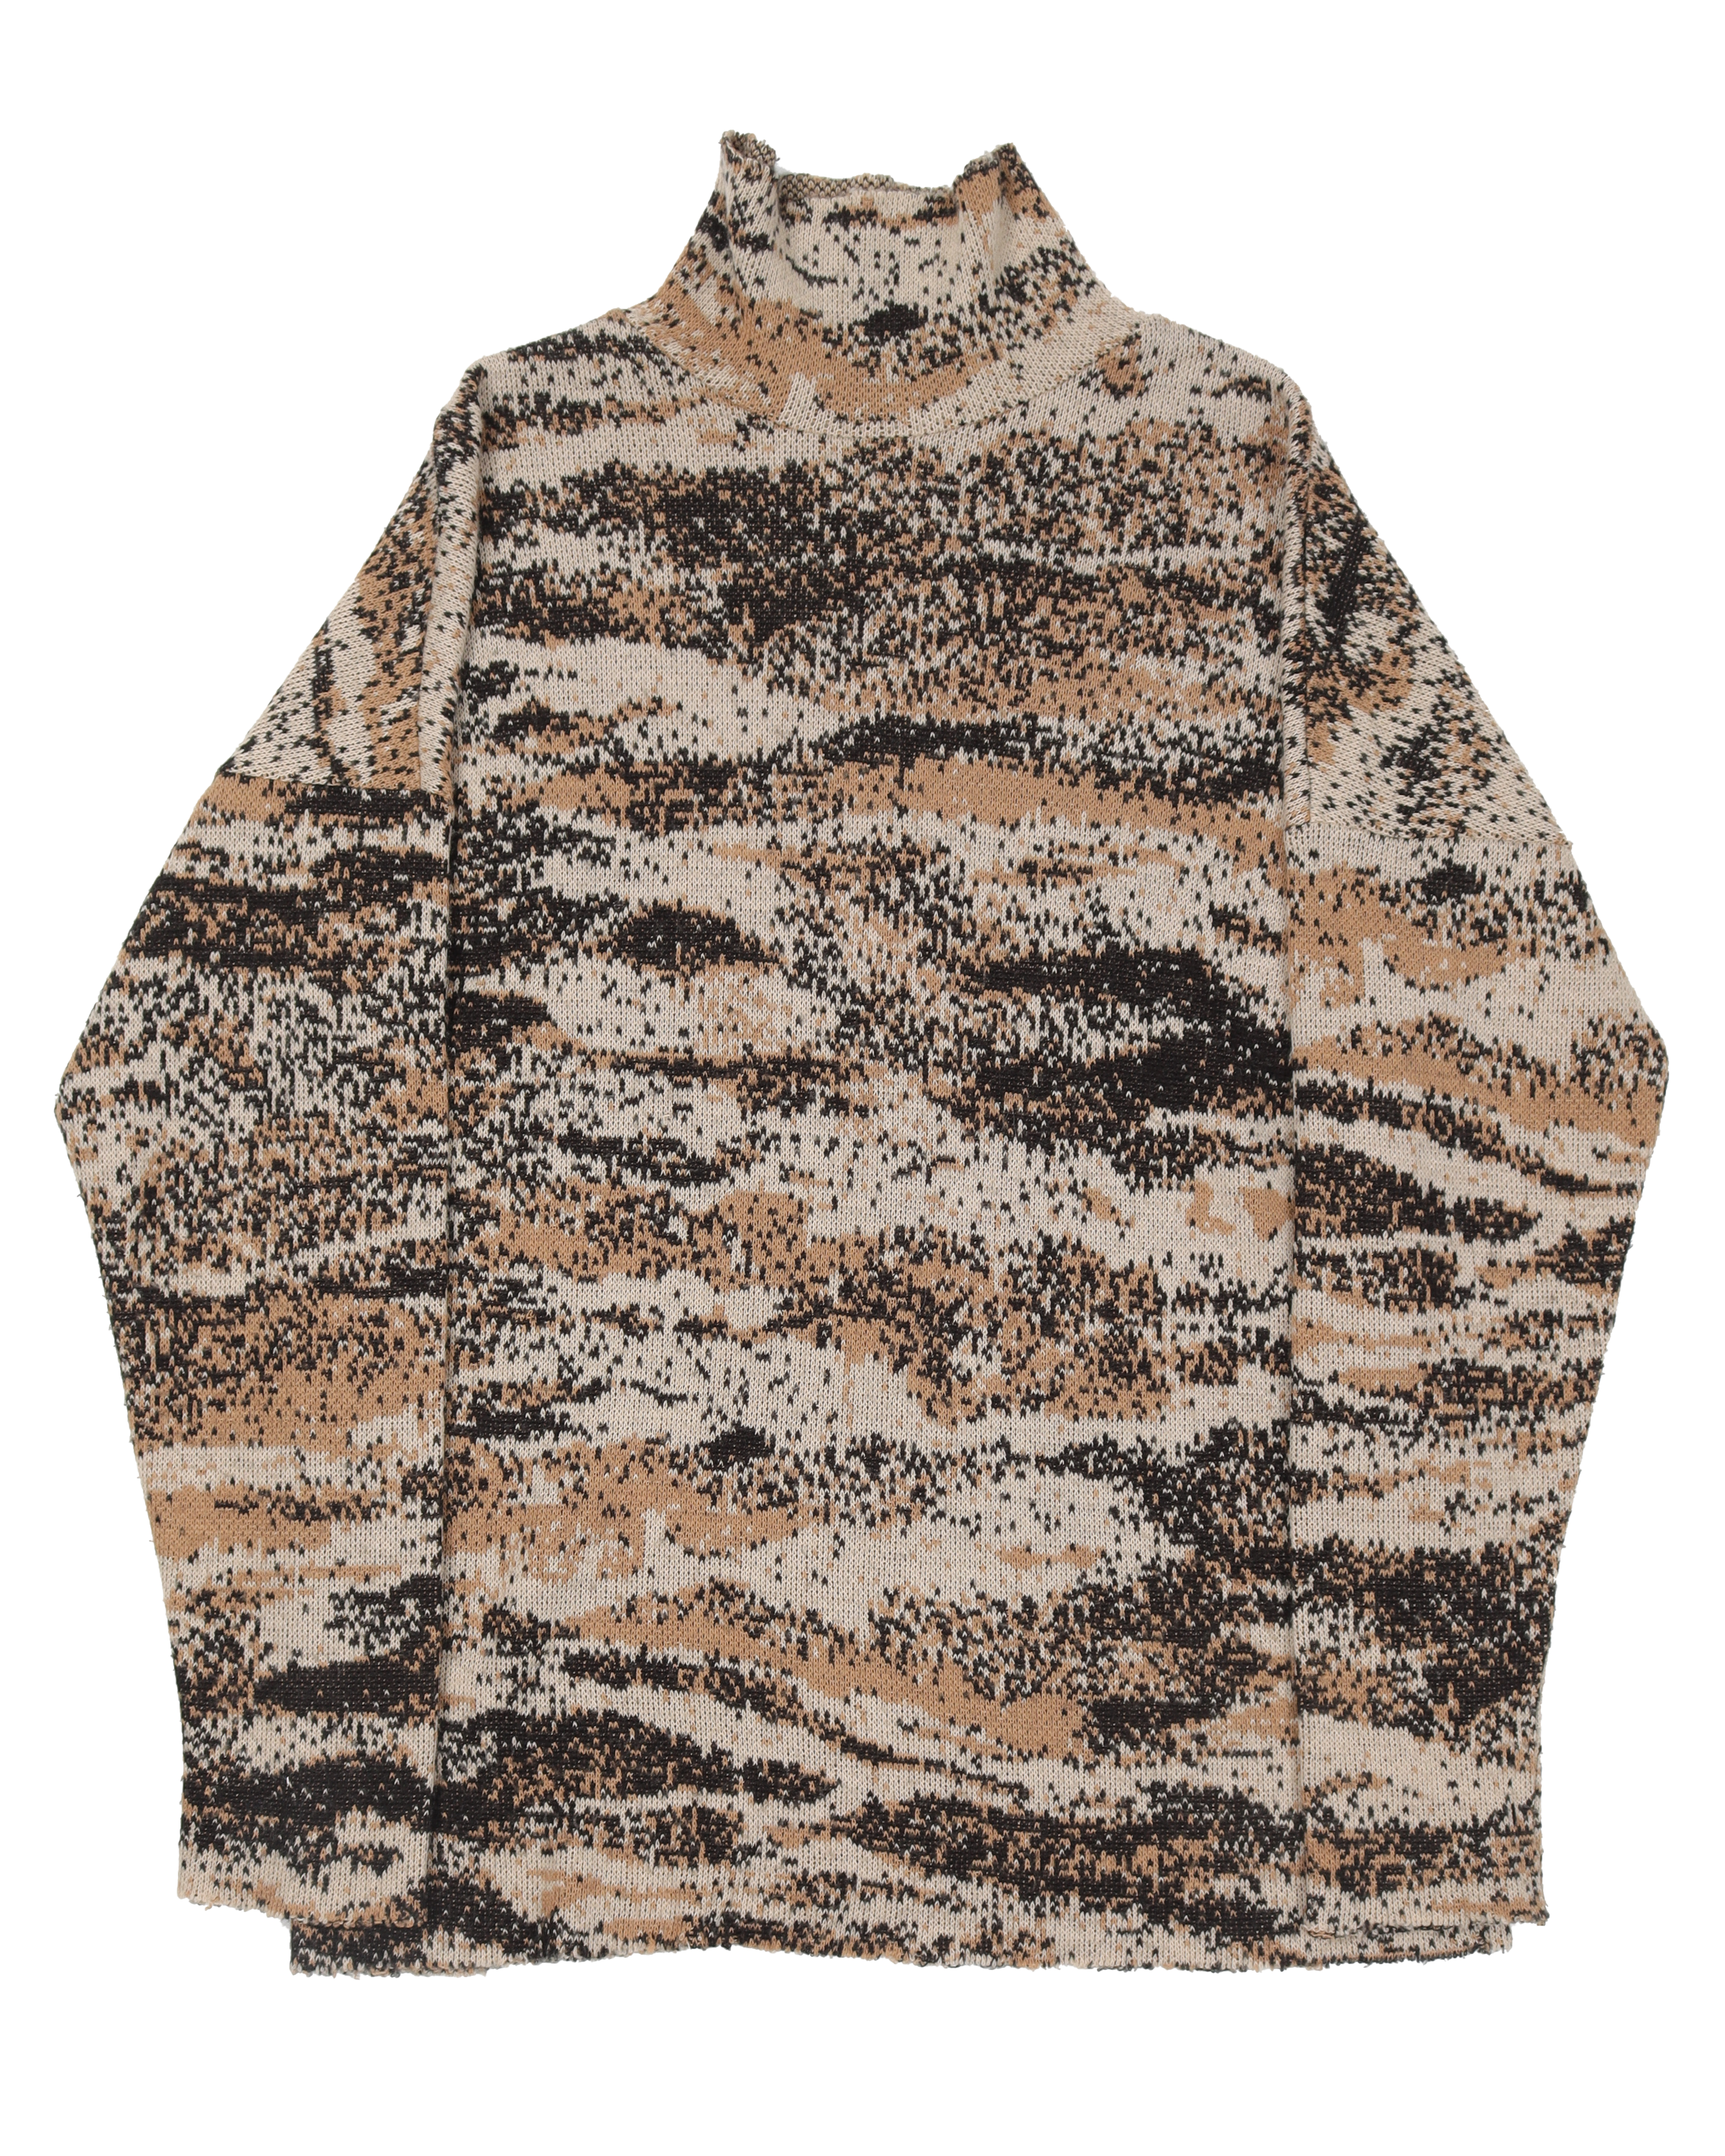 AW02 'Virginia Creeper' DigiCamo Turtleneck Sweater